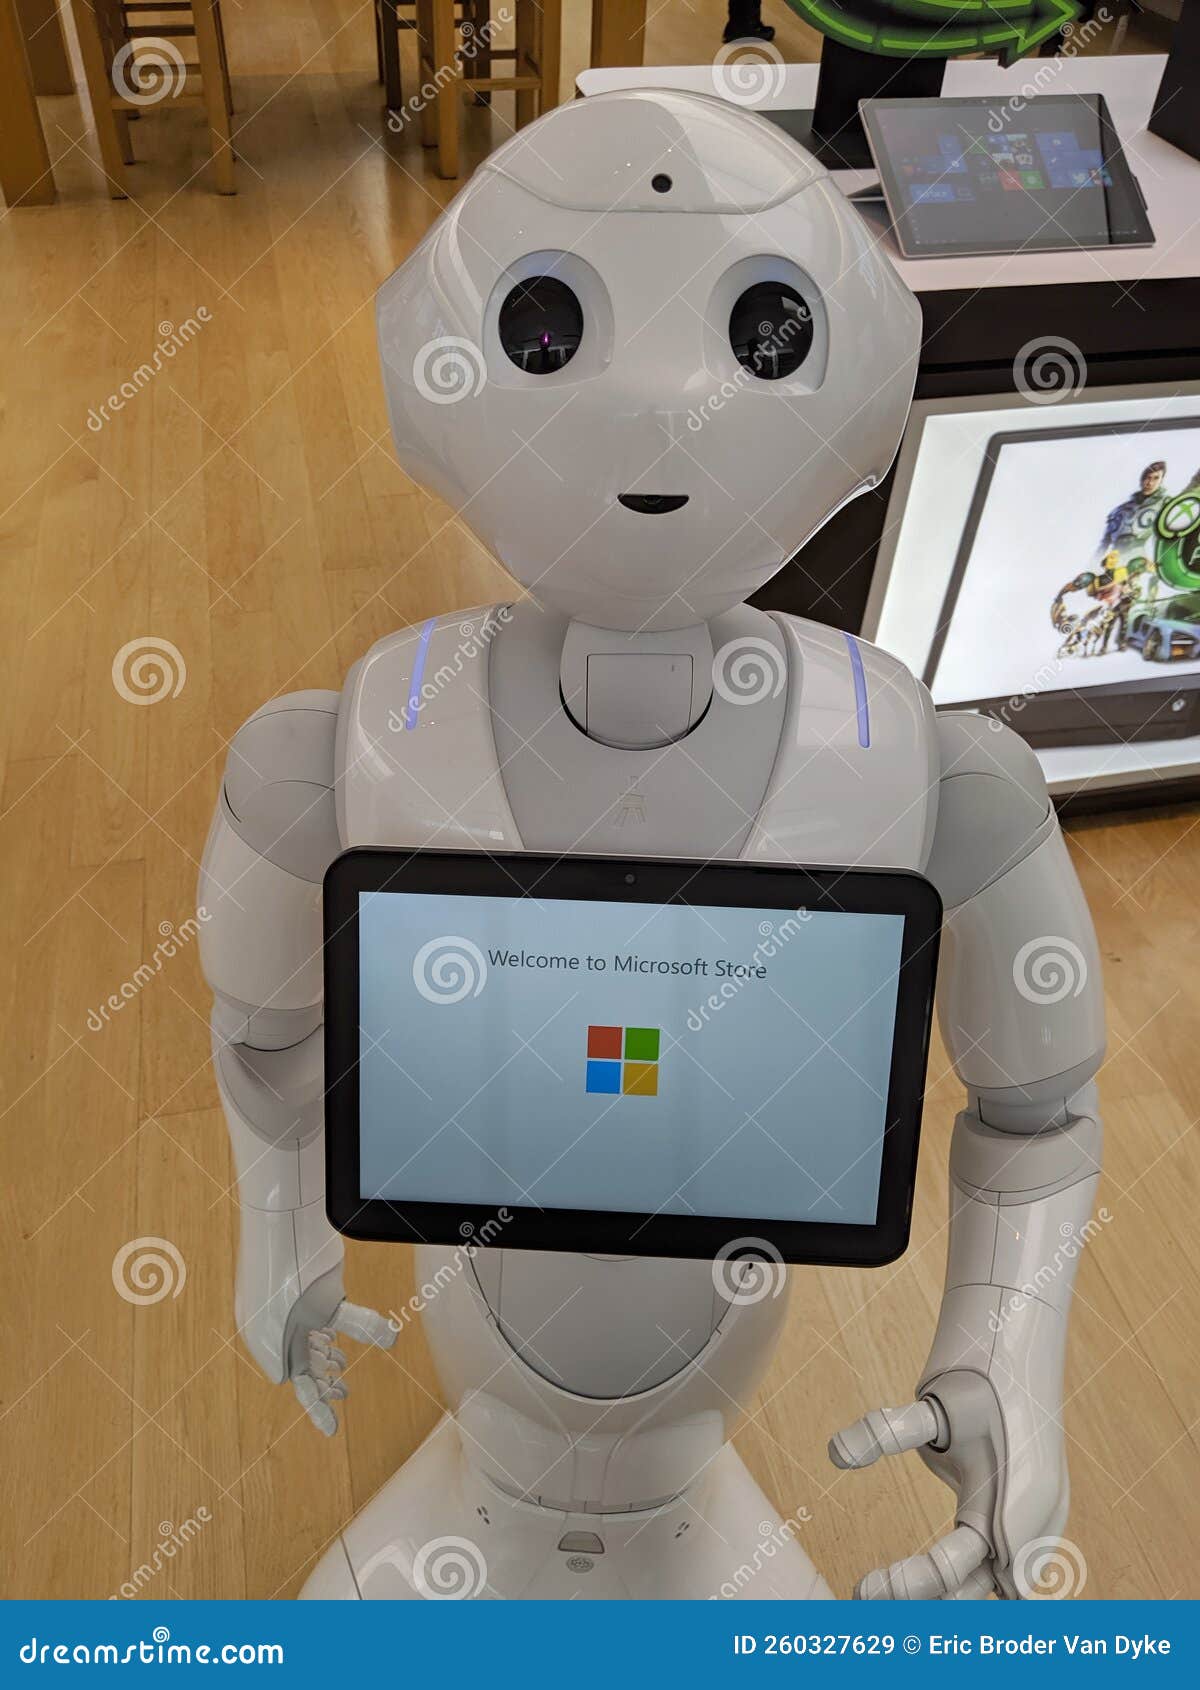 Buy I, Robot - Microsoft Store